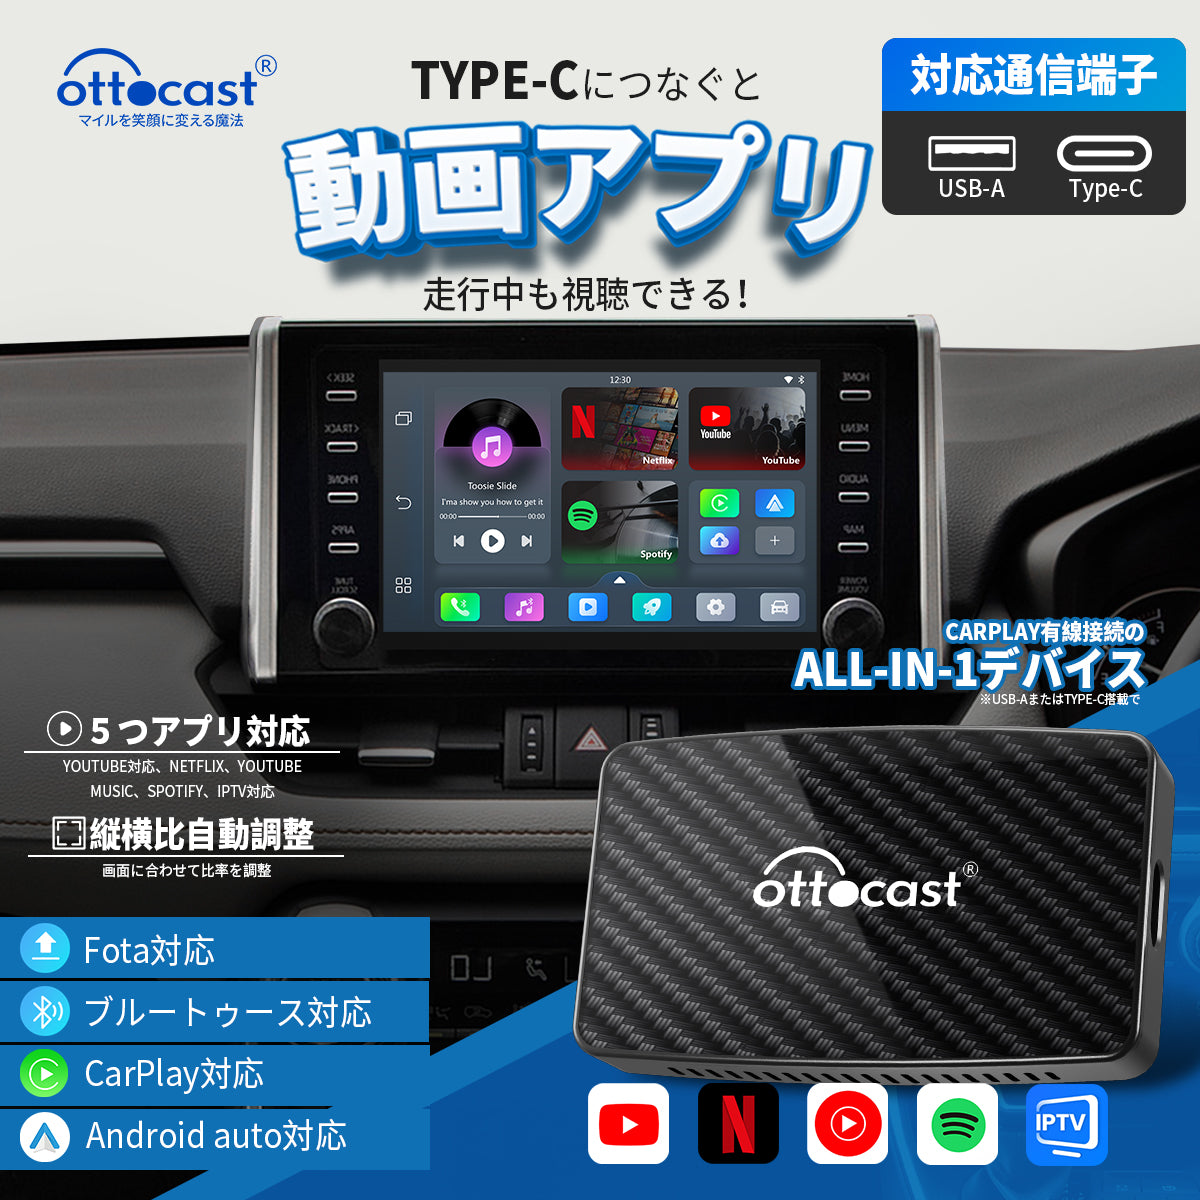 Ottocast Japanは、カーテック業界のグローバルリーダーである